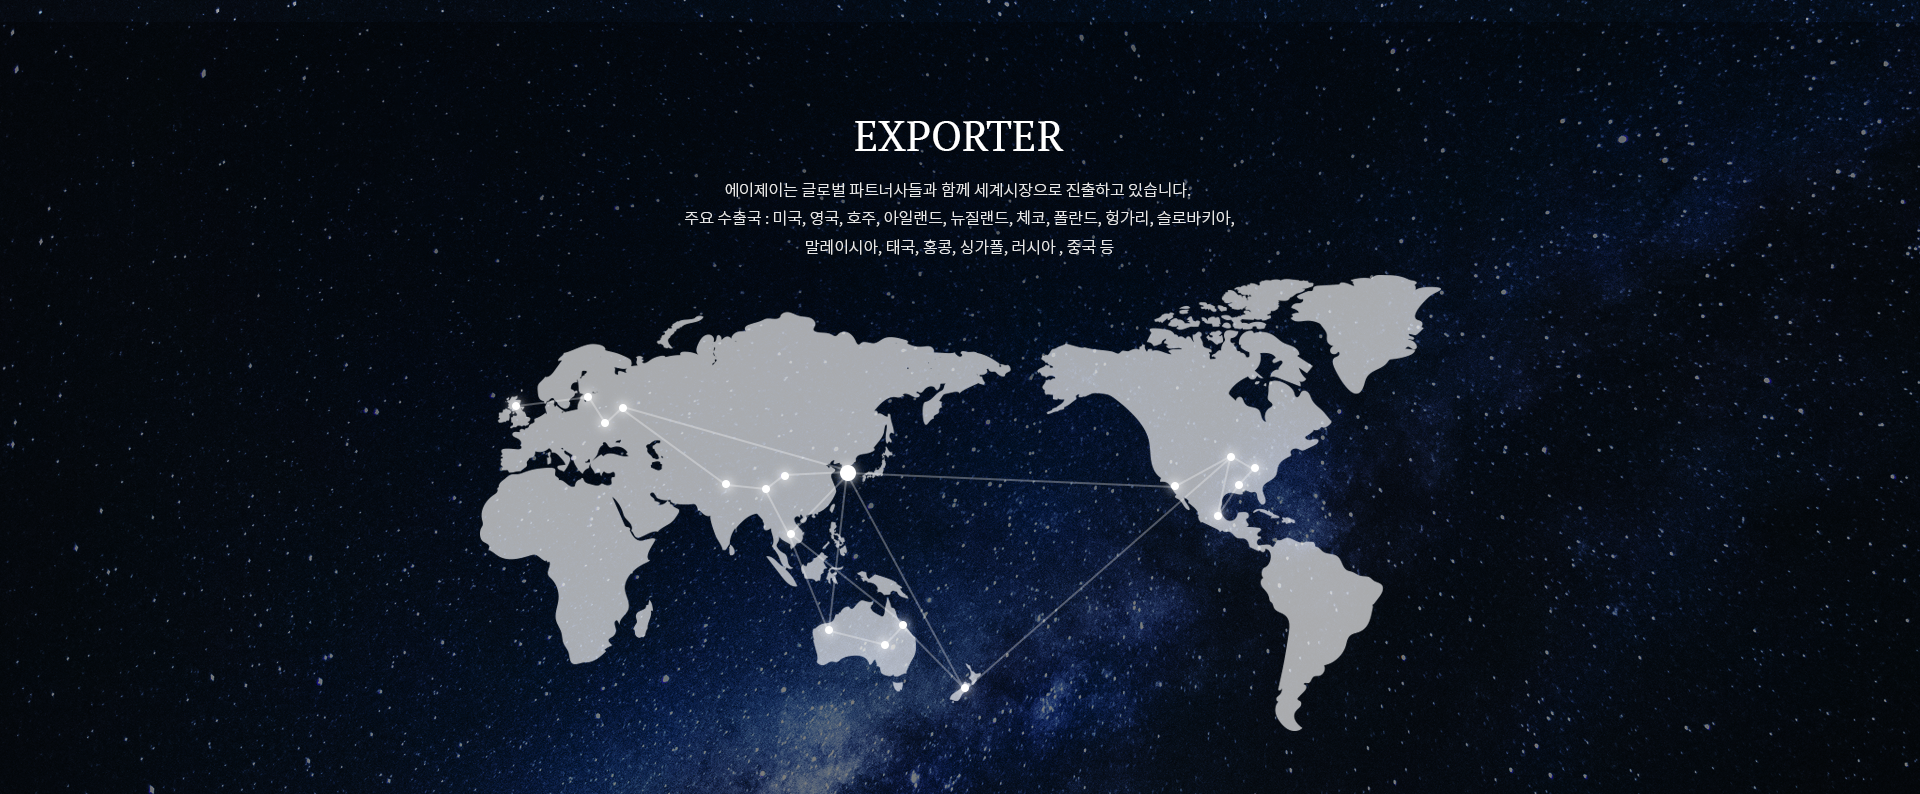 ani_exporter